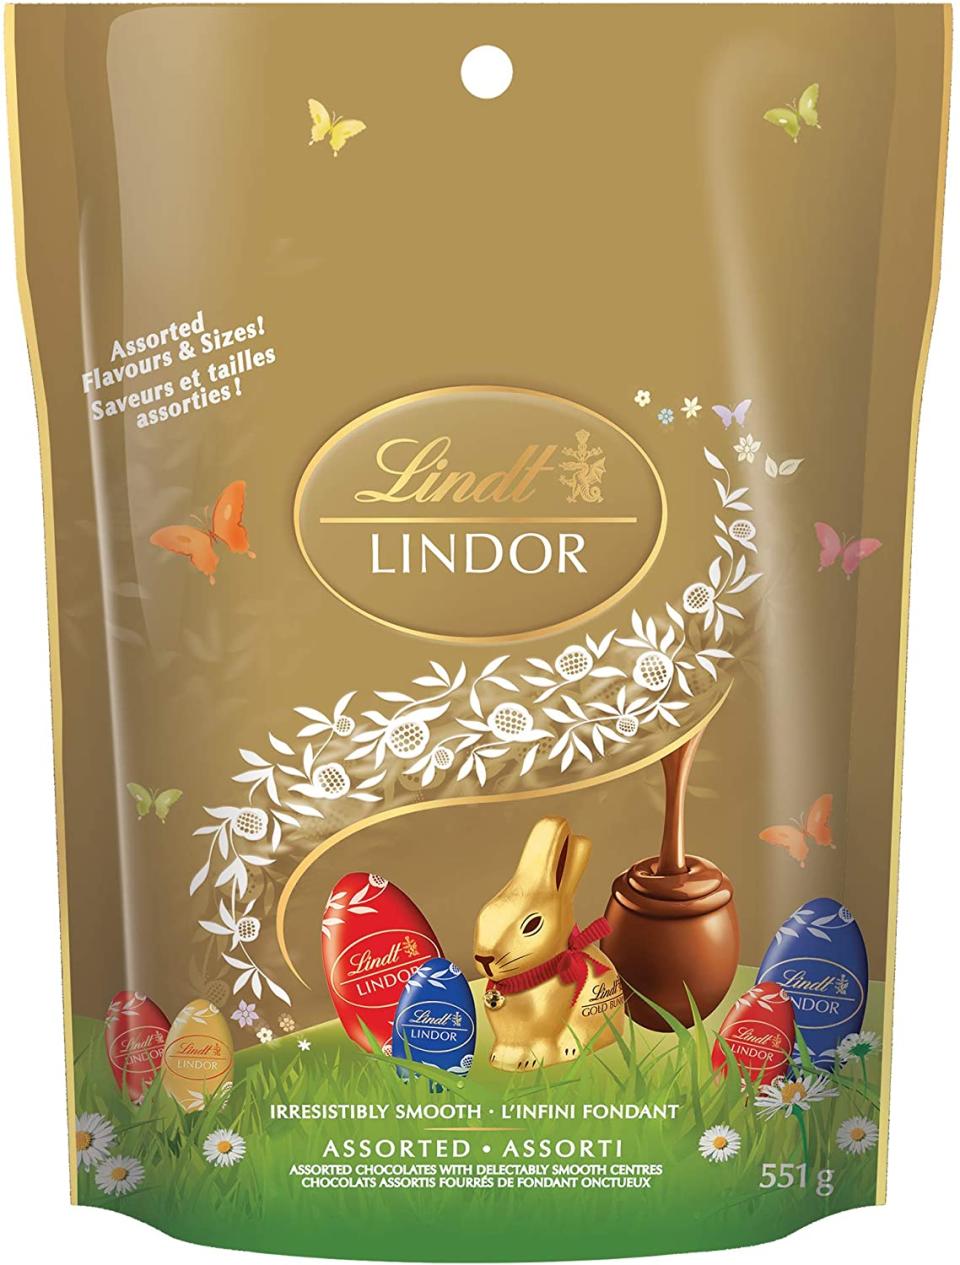 Lindt Lindor Assorted Chocolate Easter Eggs. Image via Amazon.